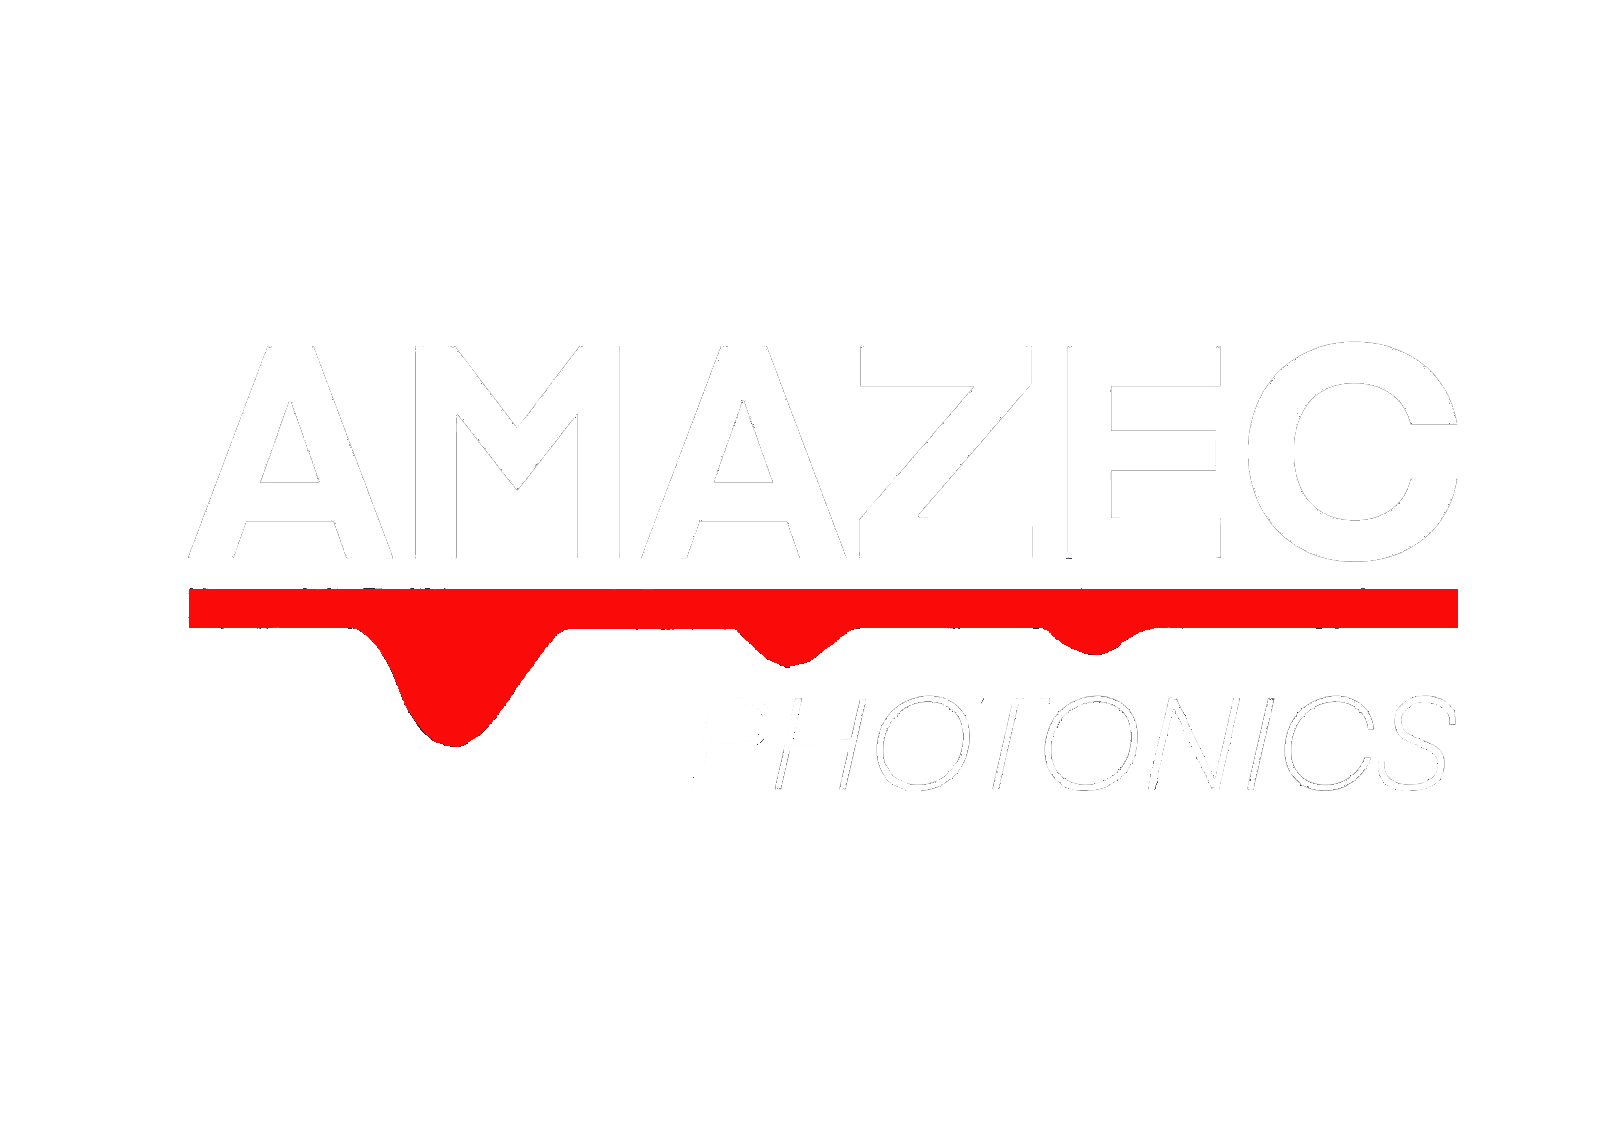 Amazec photonics